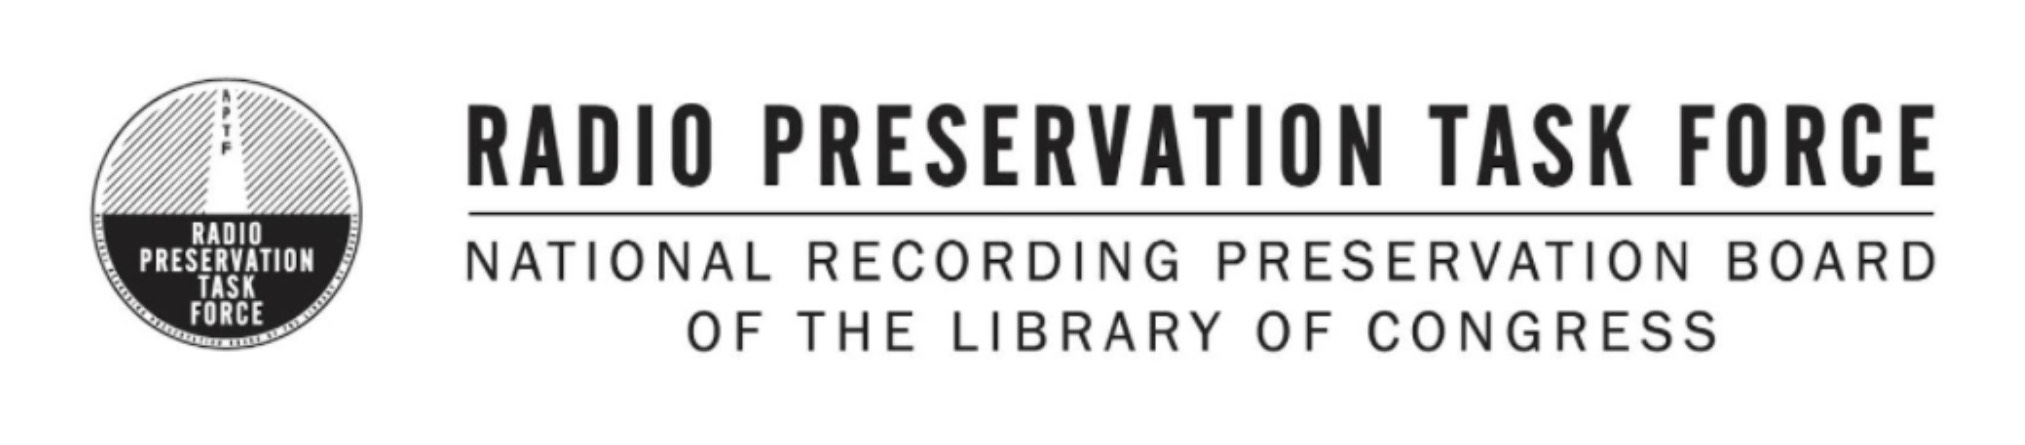 Radio Preservation Task Force